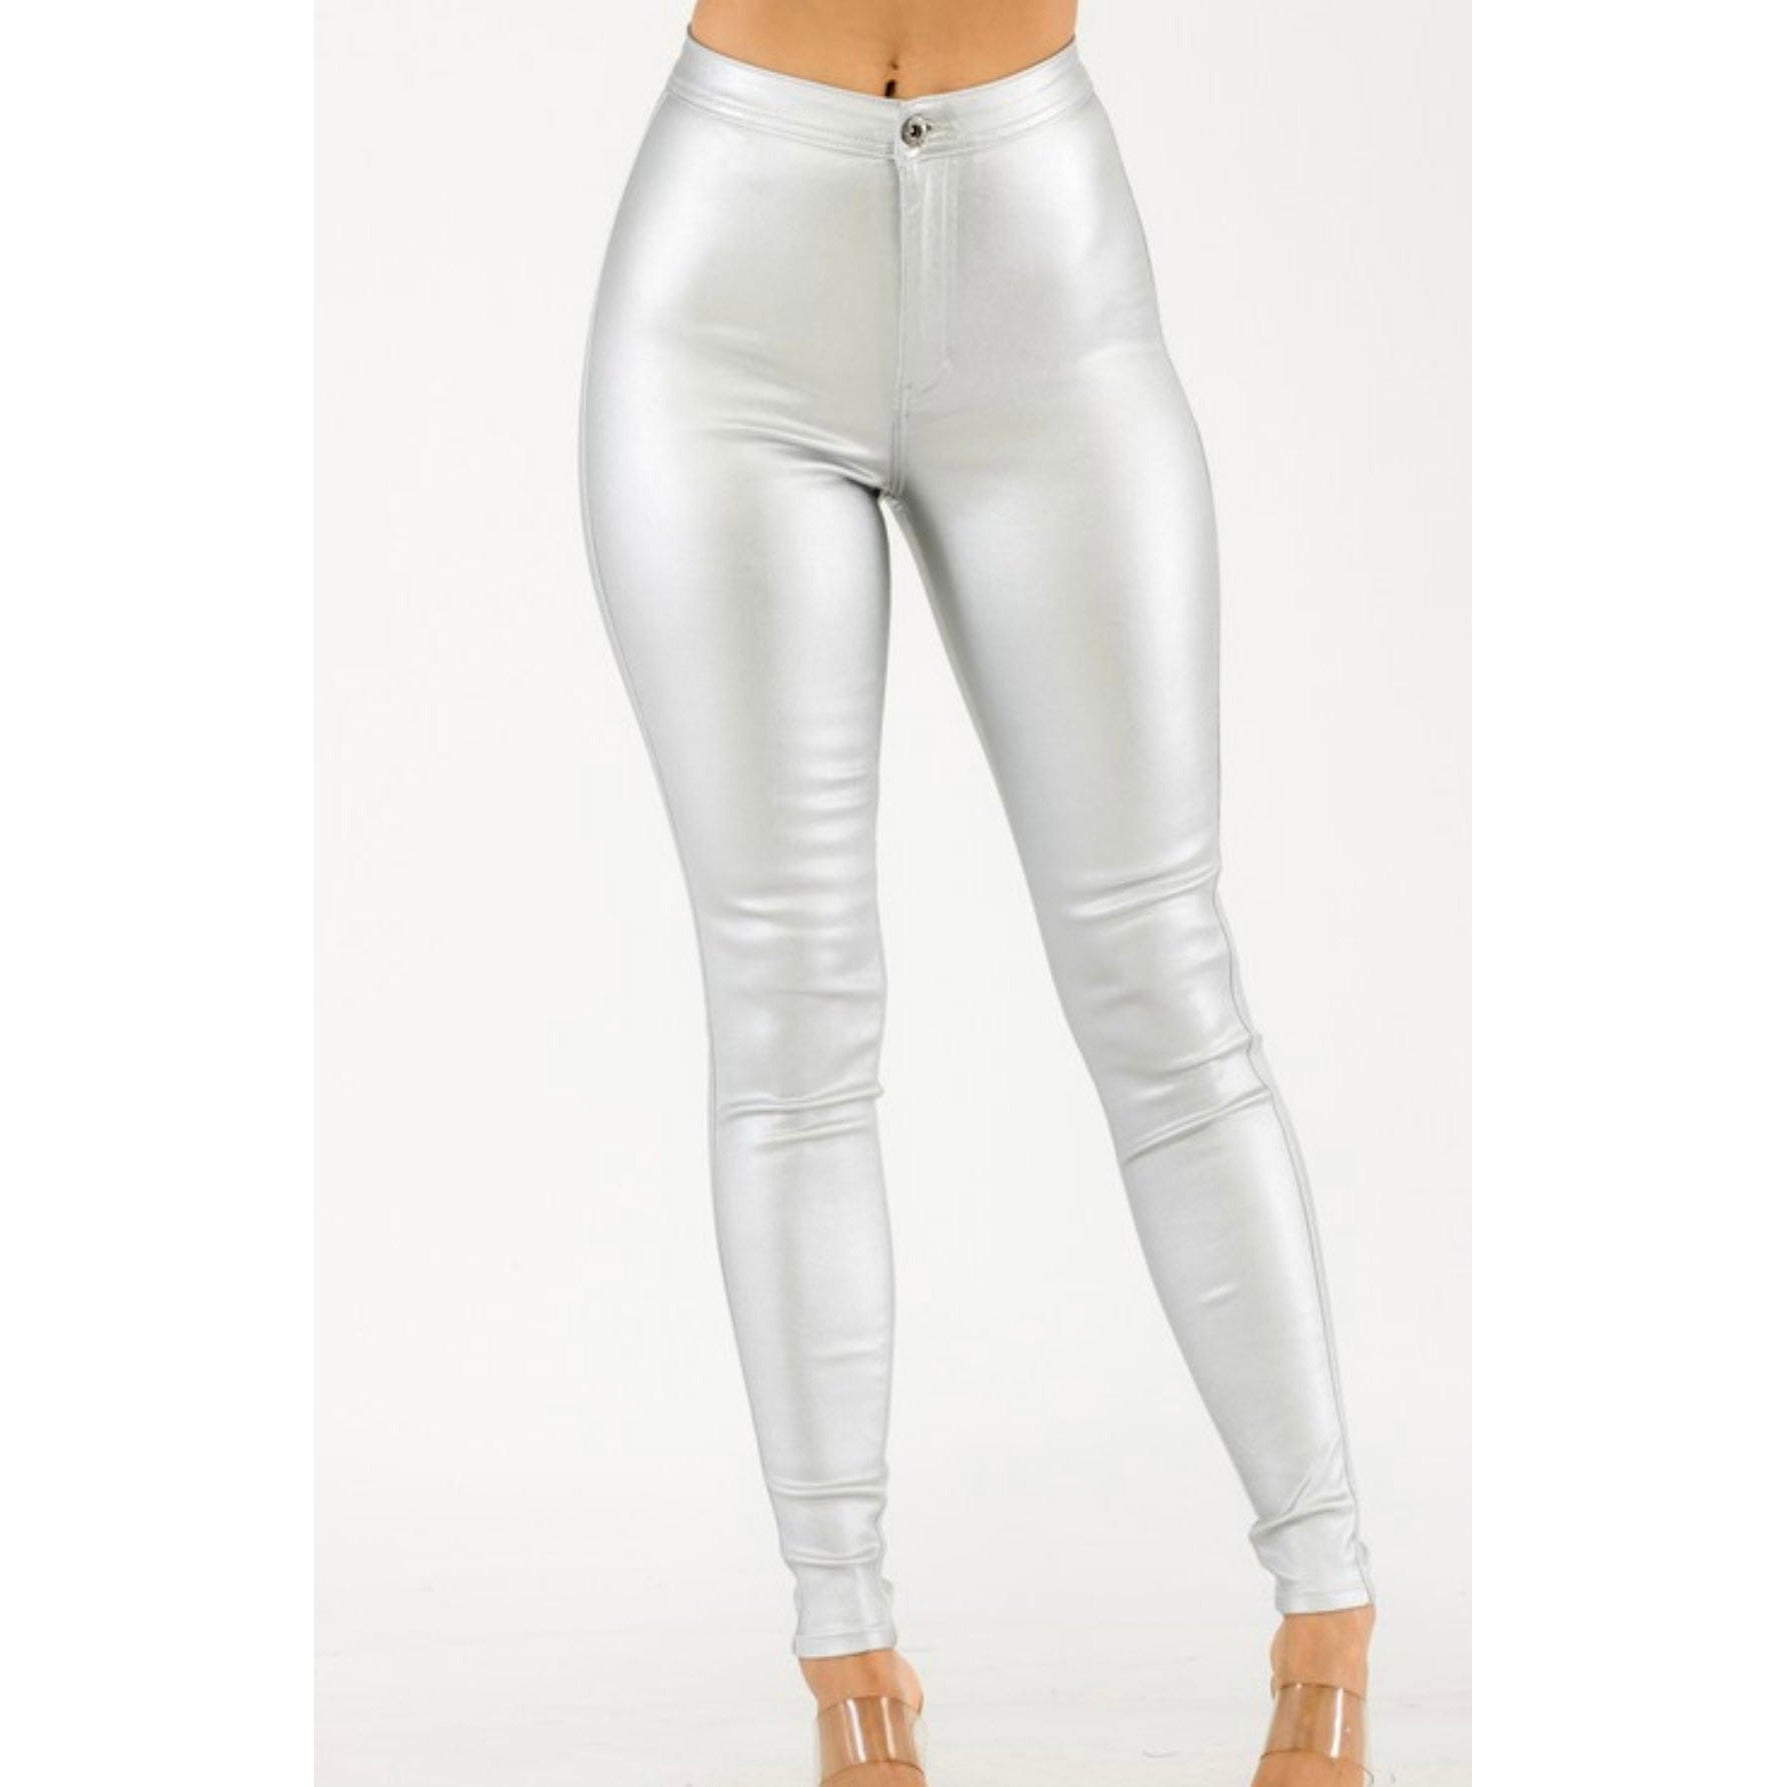 Silver Iridescent Pants